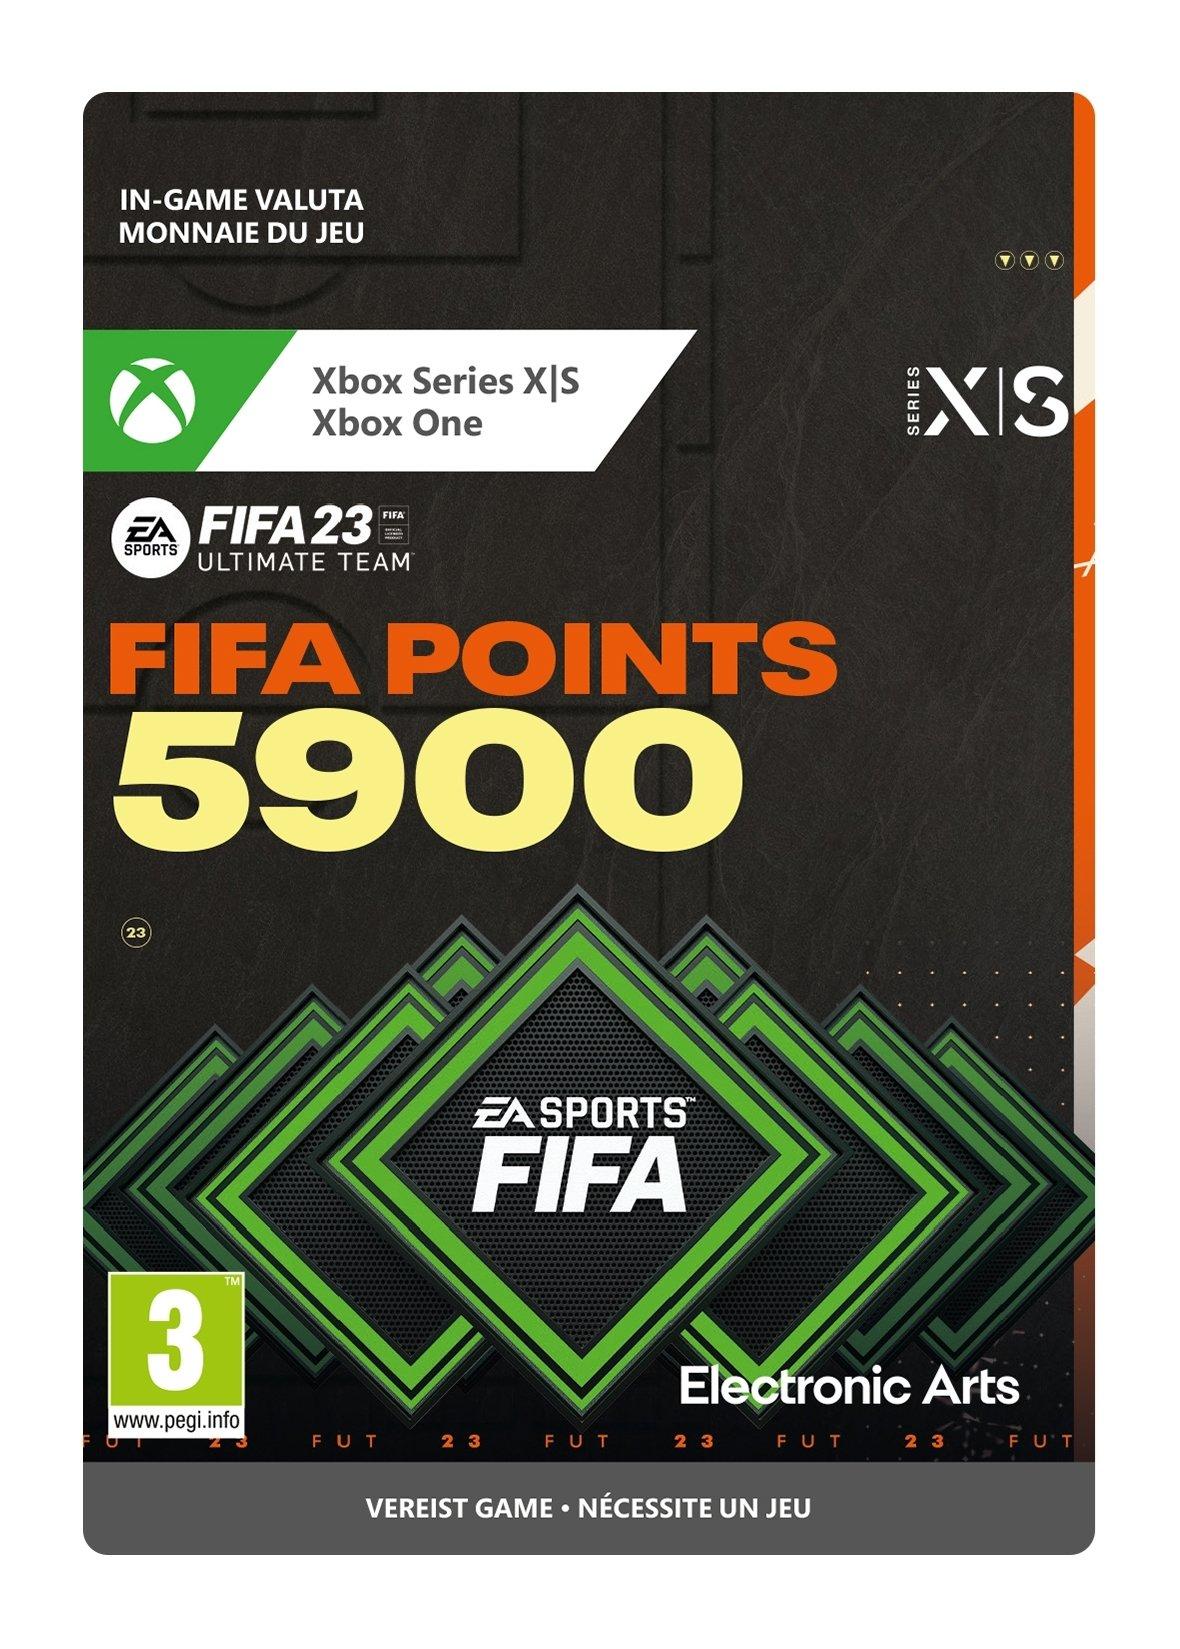 FIFA 23 - 5900 FIFA Points - Xbox Series X|S/ Xbox One - Currency - Niet beschikbaar in Belgie | 7F6-00460 (7e22aba3-e63e-254e-add1-3f212af33ca0)